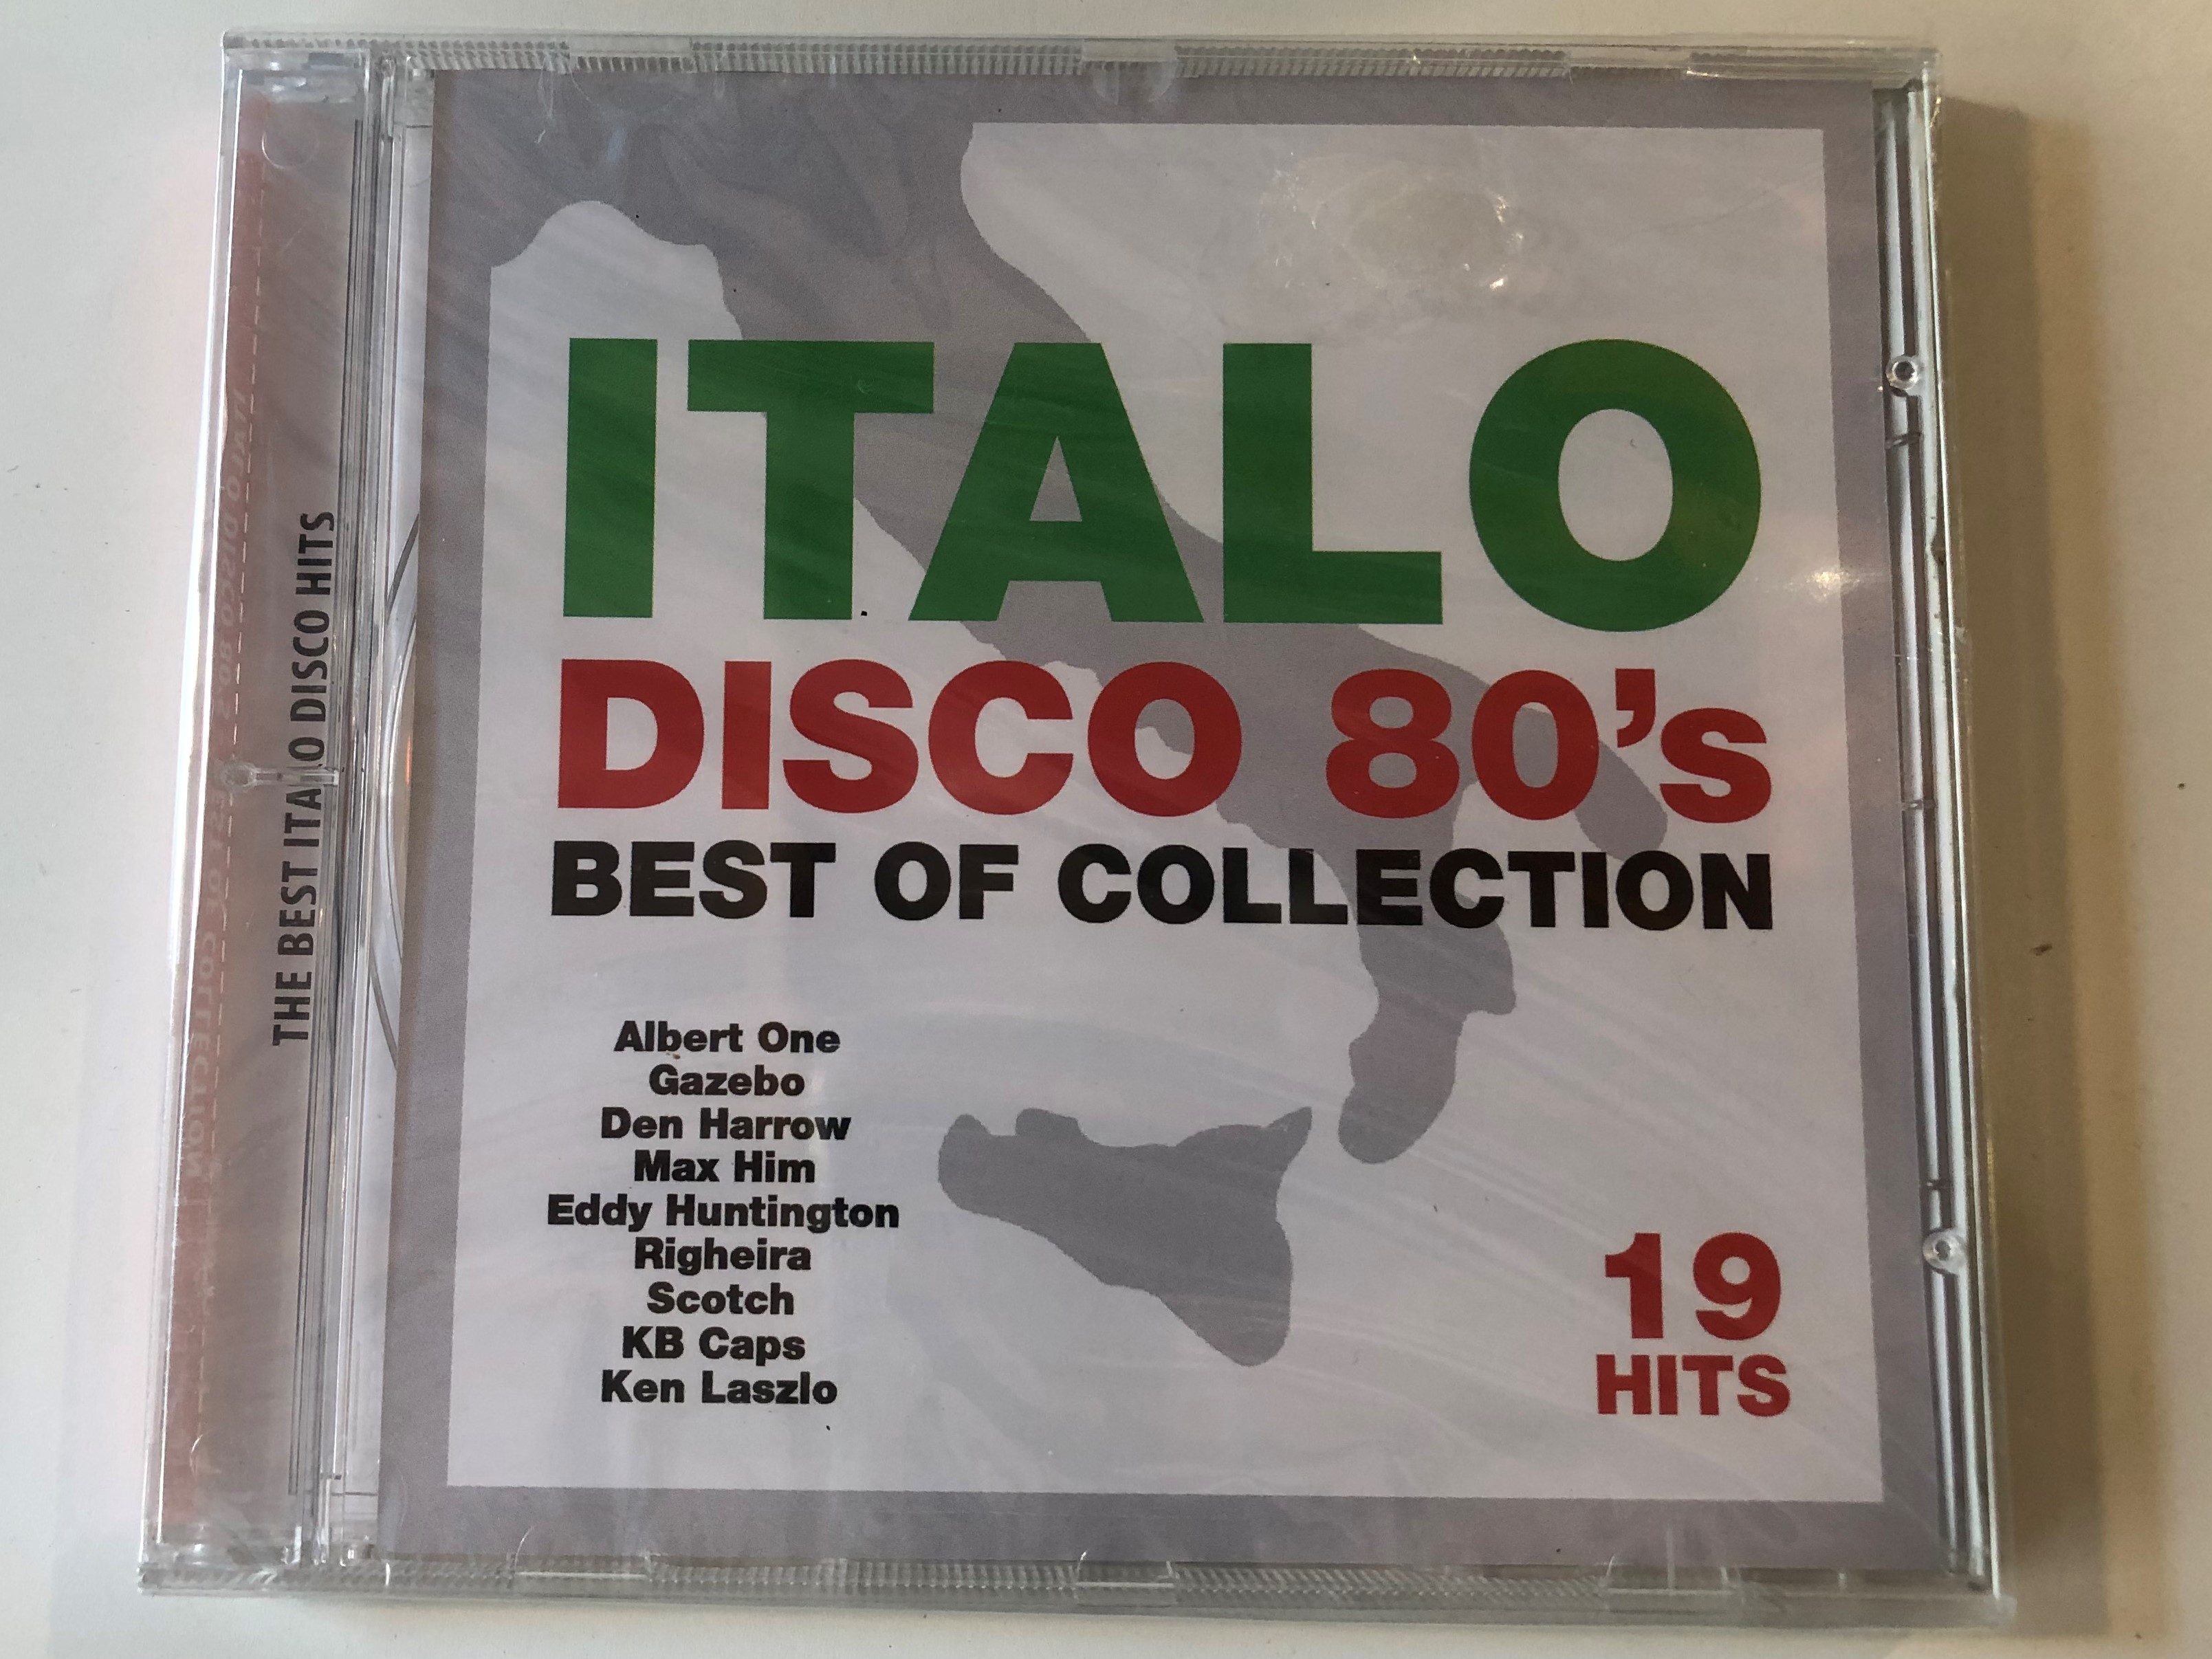 Italo Disco 80's (Best Of Collection) / Albert One, Gazebo, Den Harrow, Max  Him, Eddy Huntington, Righeira, Scotch, KB Caps, Ken Laszlo / 19 Hits /  Frontline Productions & Records ‎Audio CD /